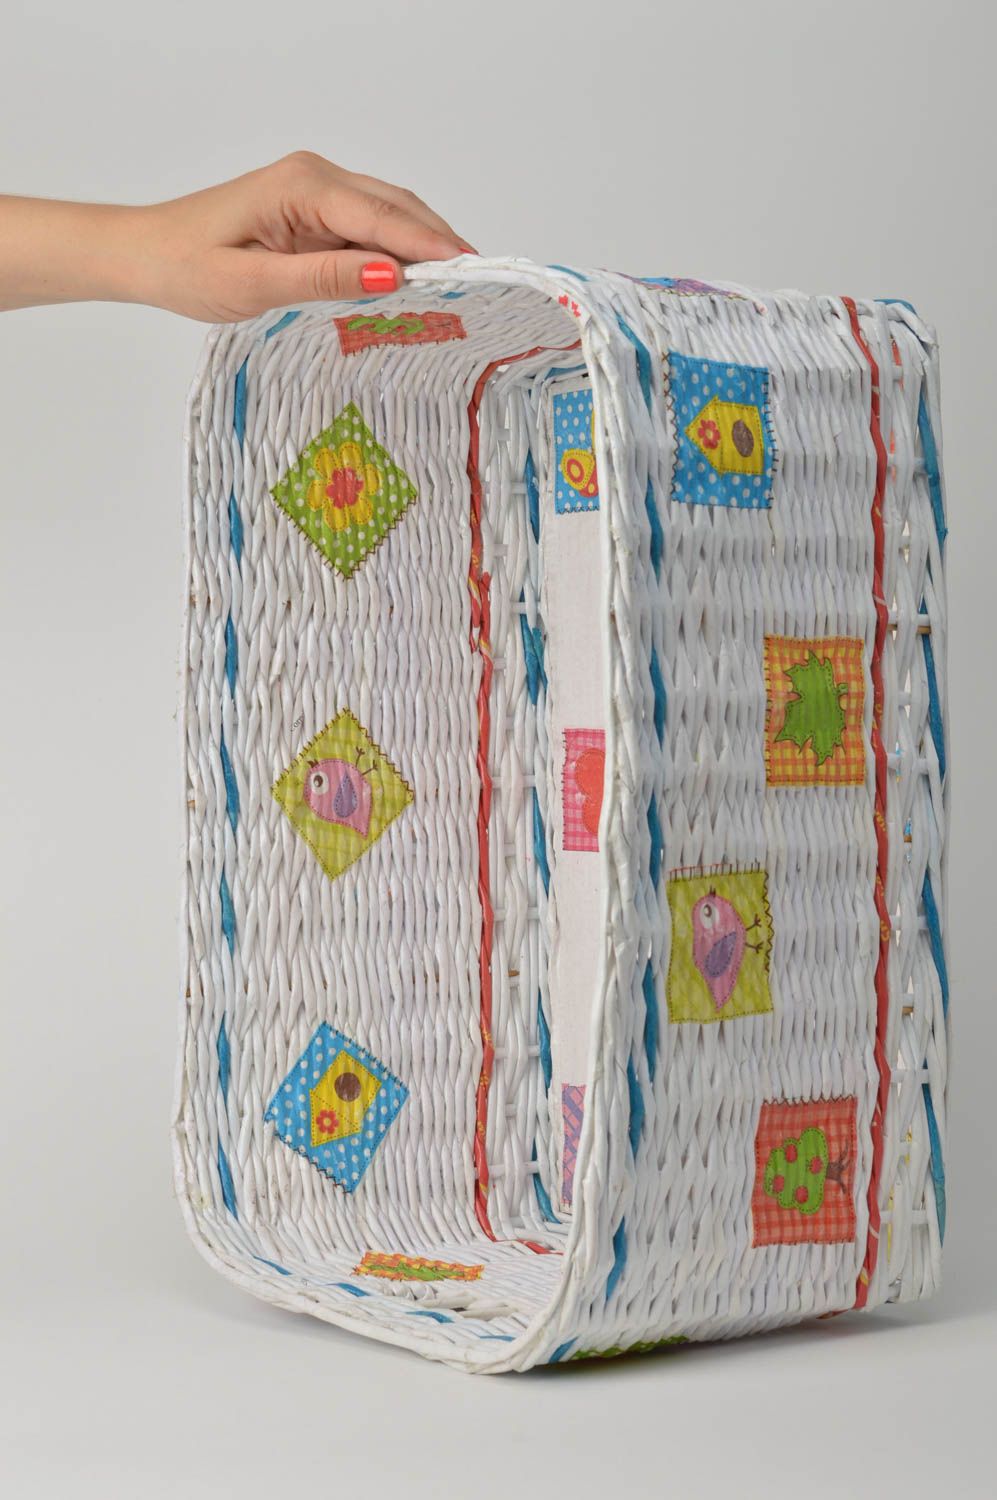 Unusual handmade woven basket decorative newspaper basket bedroom designs photo 1